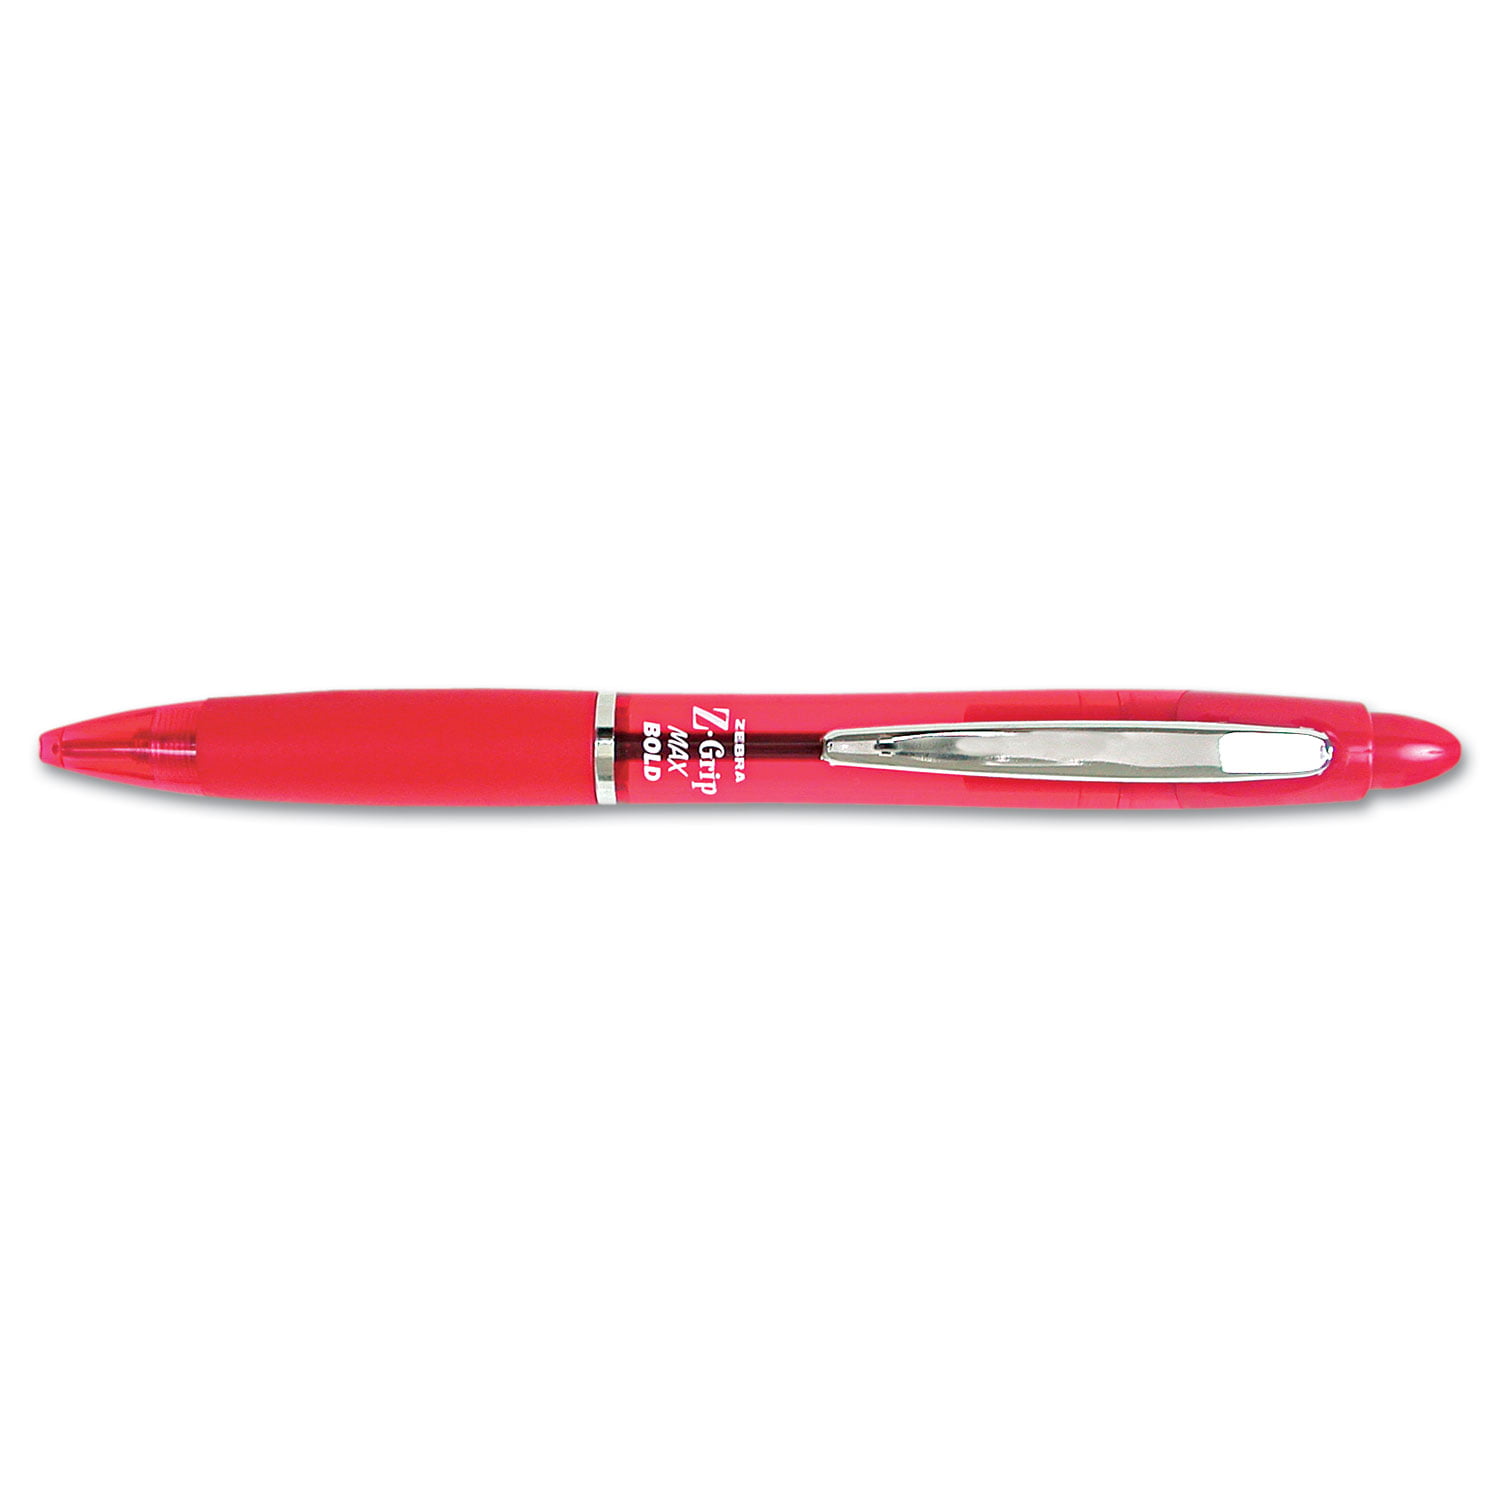 Z-Grip MAX Ballpoint Retractable Pen ZEB22420 